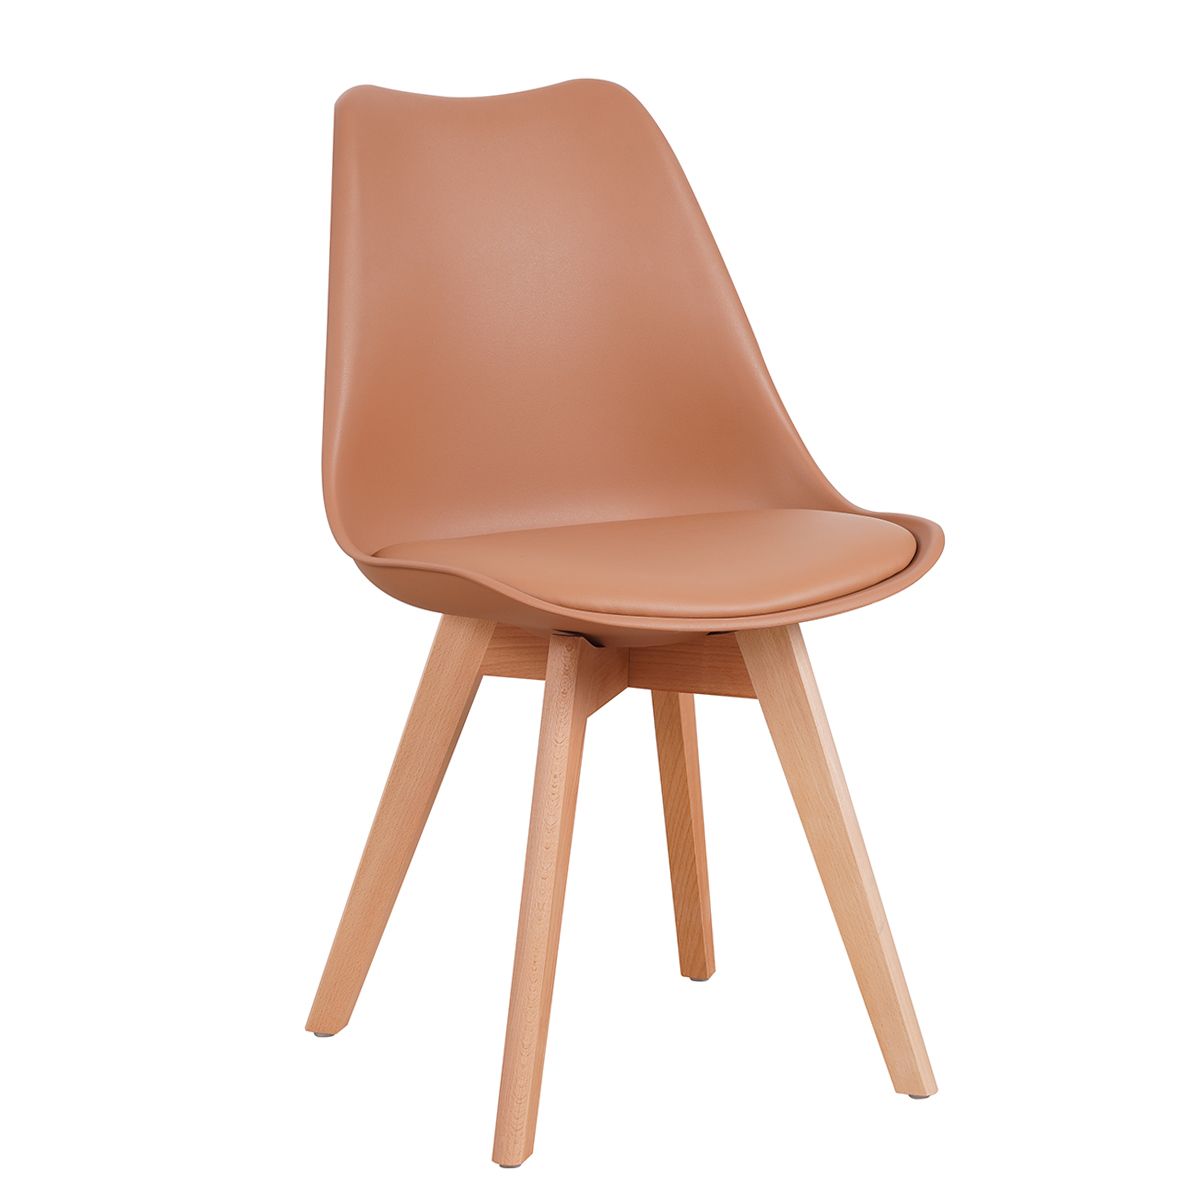 Chair GROUGH Cappuccino PP / PU / Wood 49x56x83cm